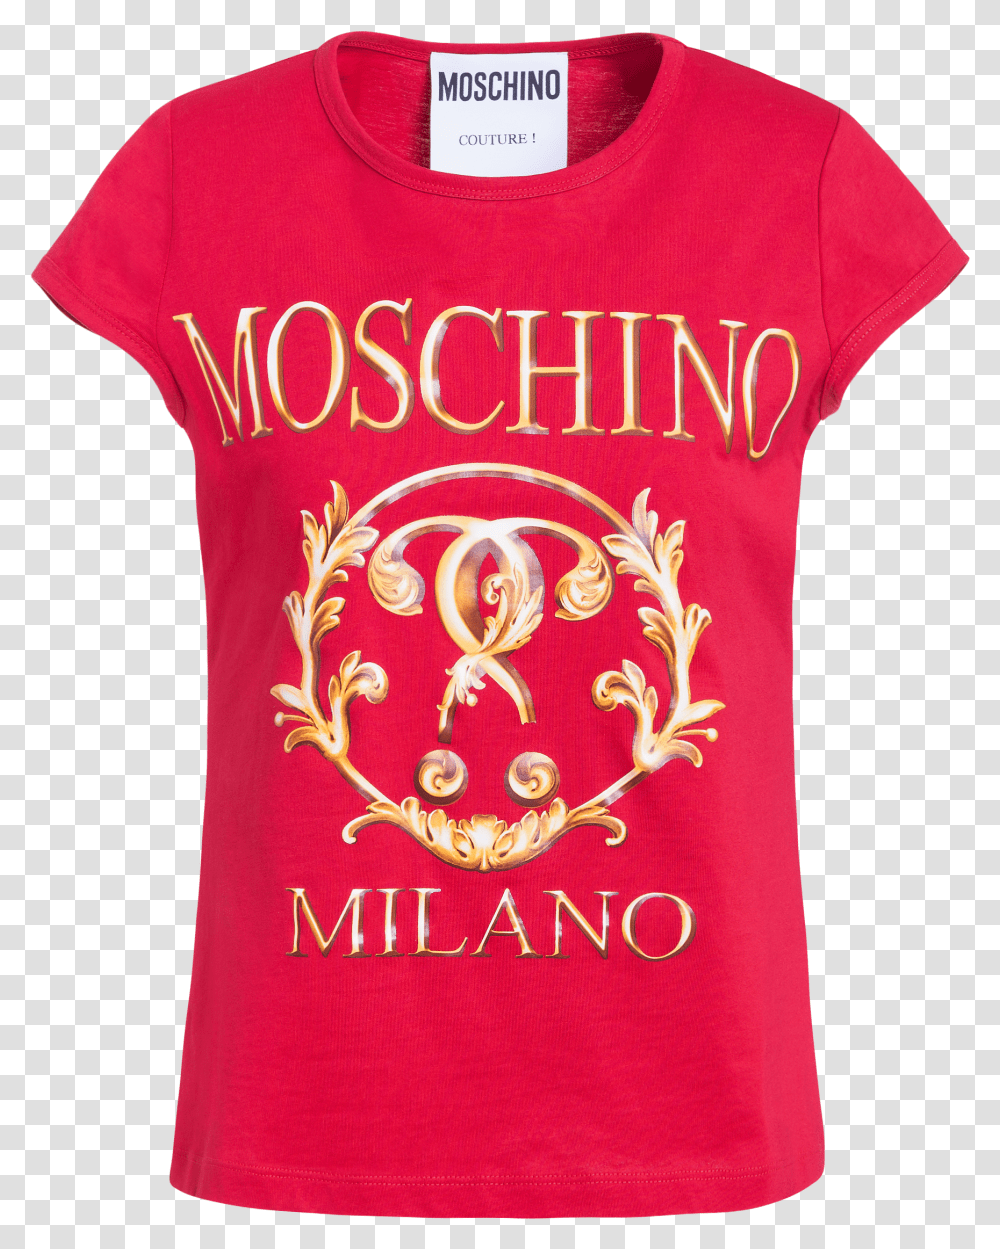 Moschino Sweatshirt Transparent Png